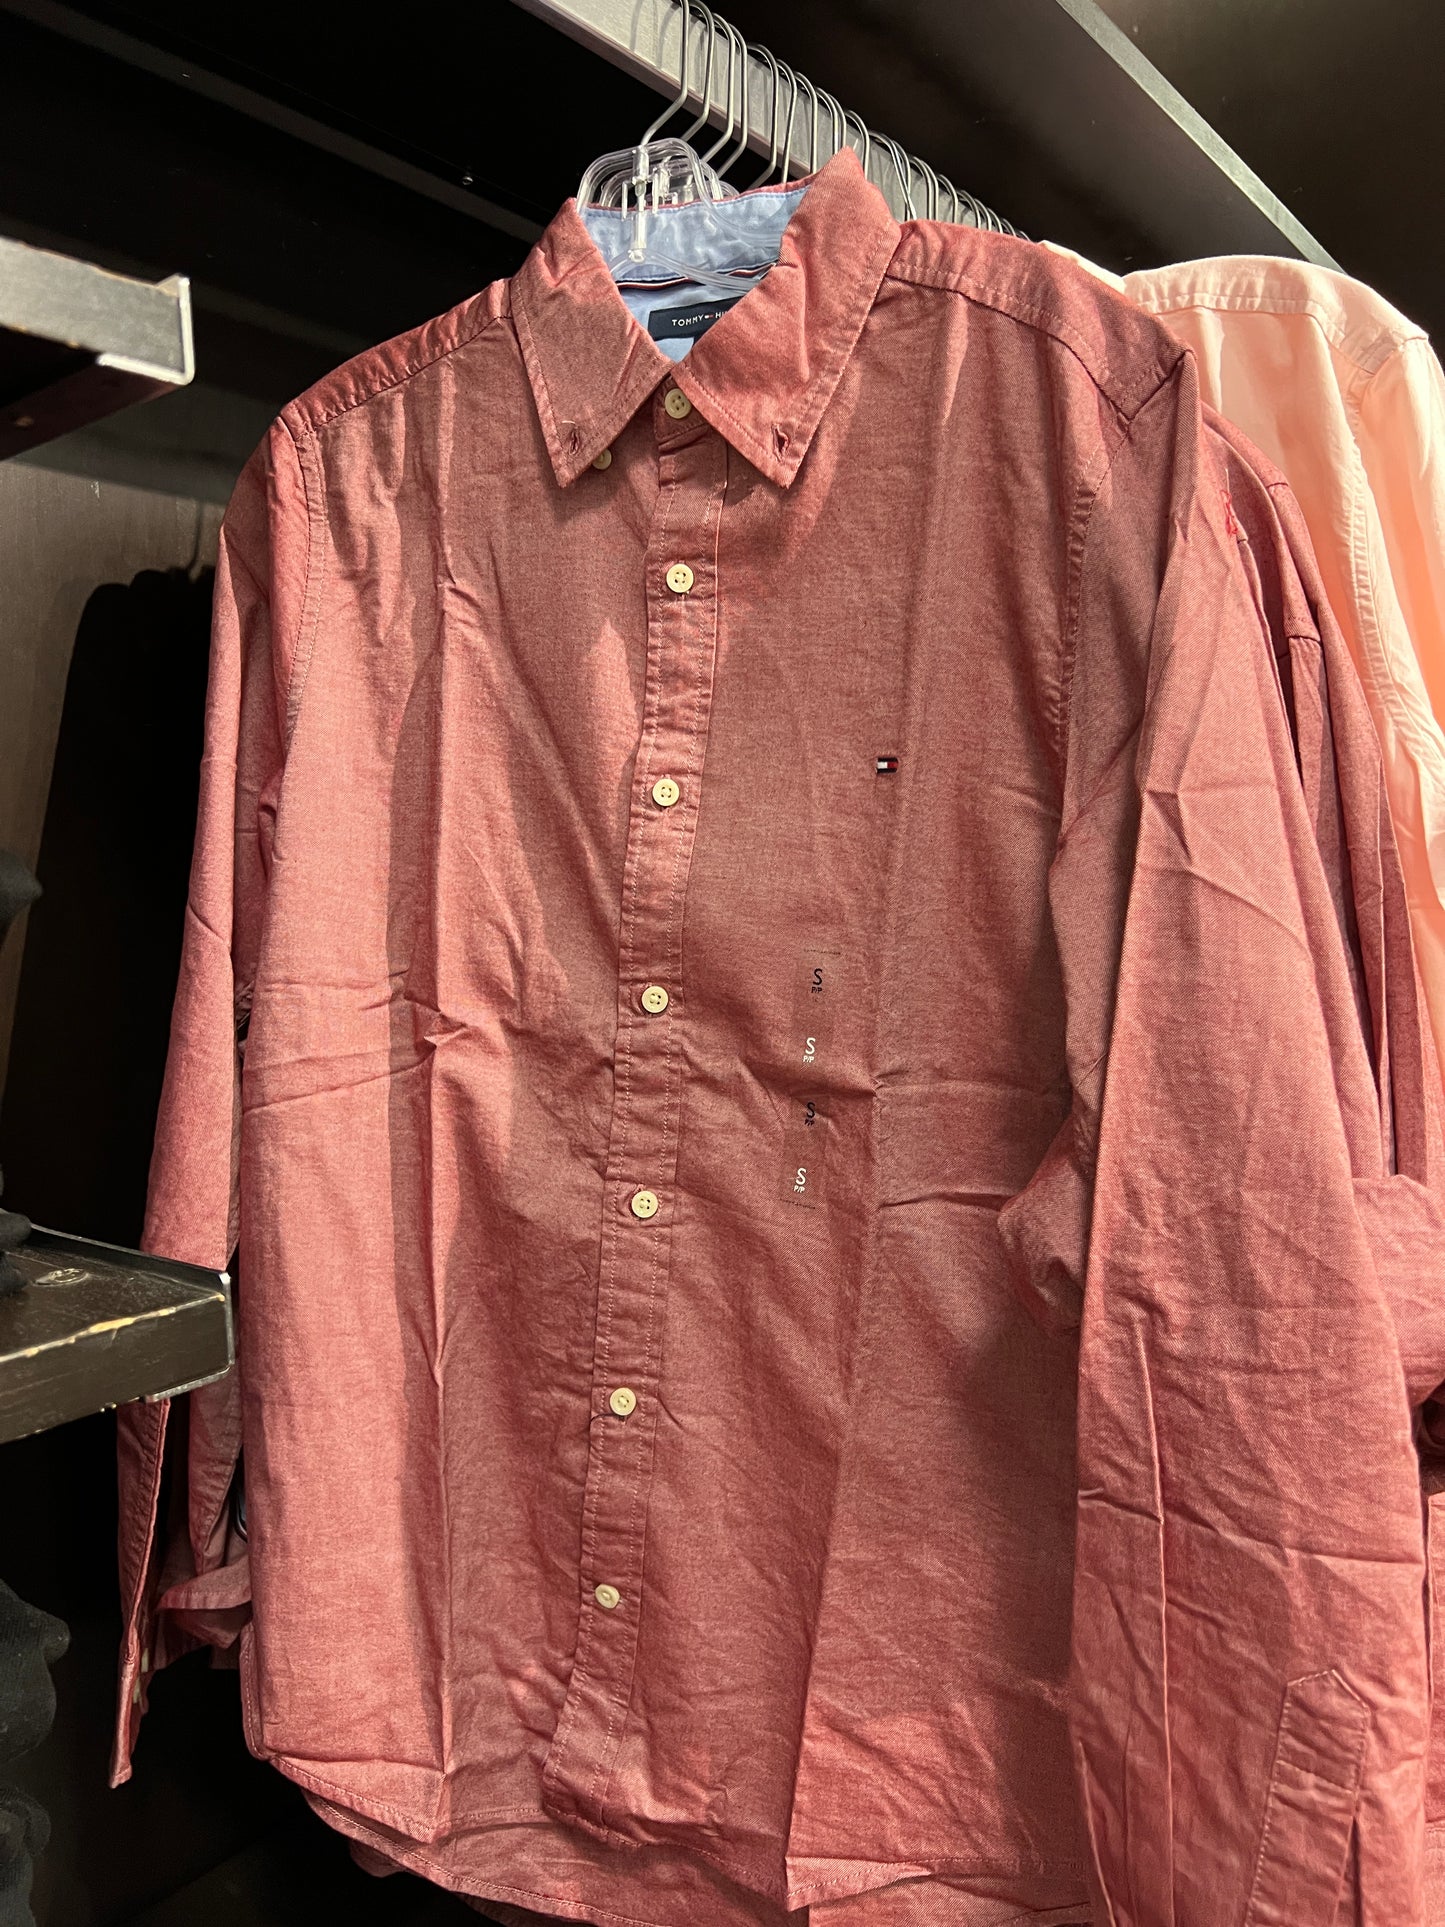 Camisa TOMMY HILFIGER masculina de botão